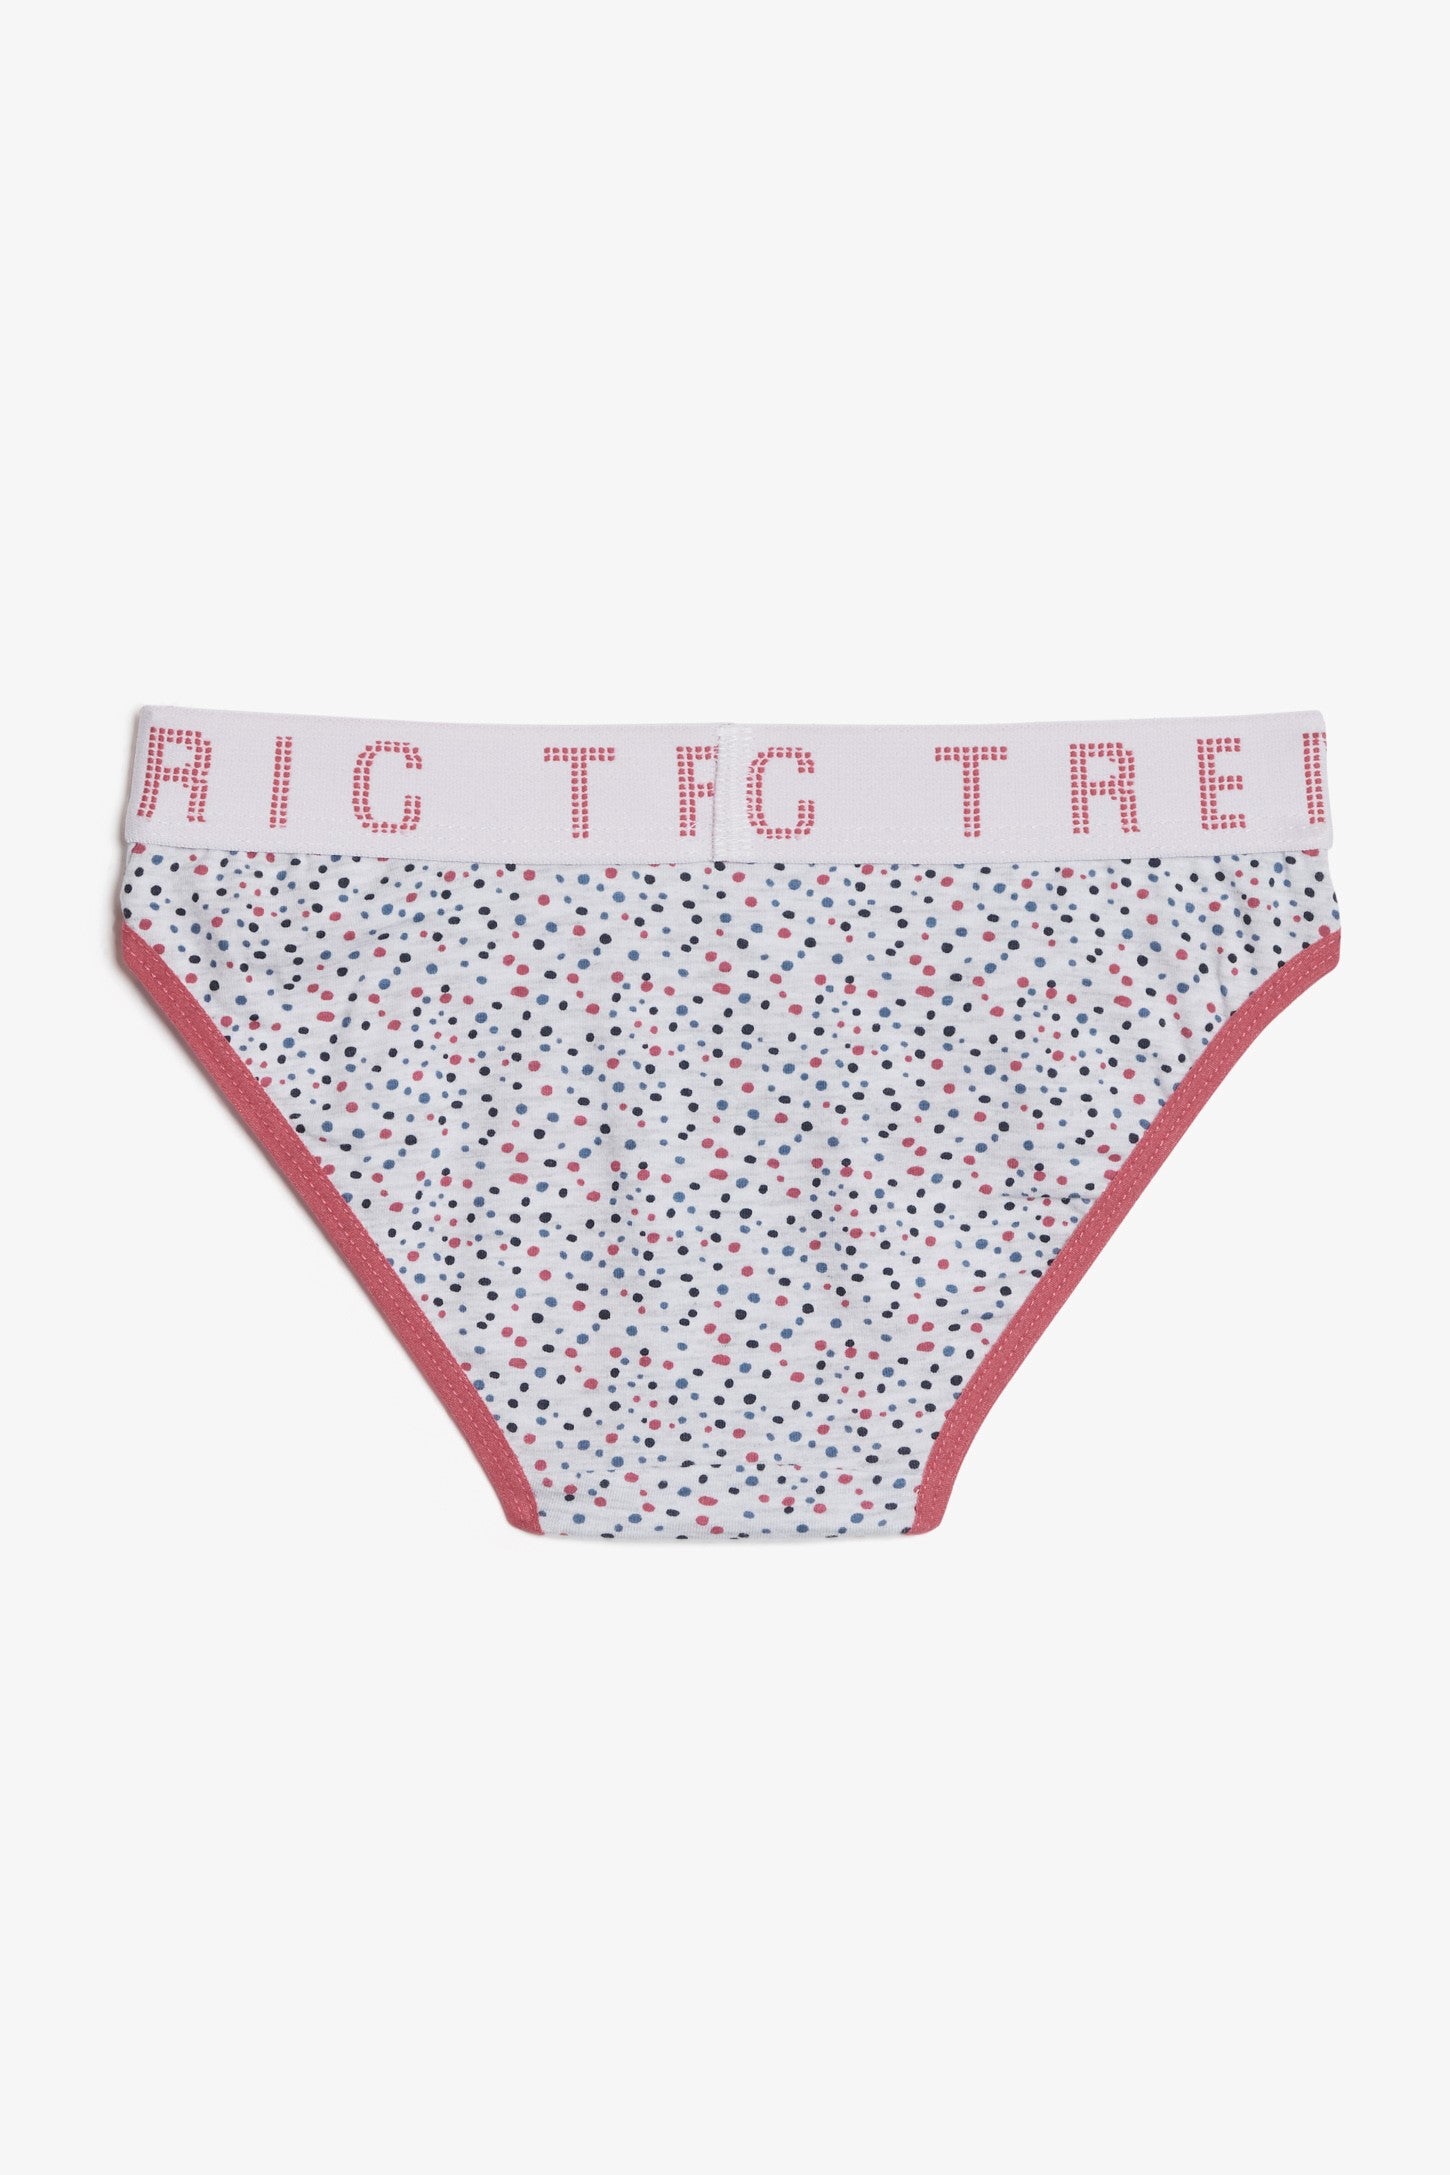 Culotte bikini, 3/15$ - Ado fille && GRIS PALE